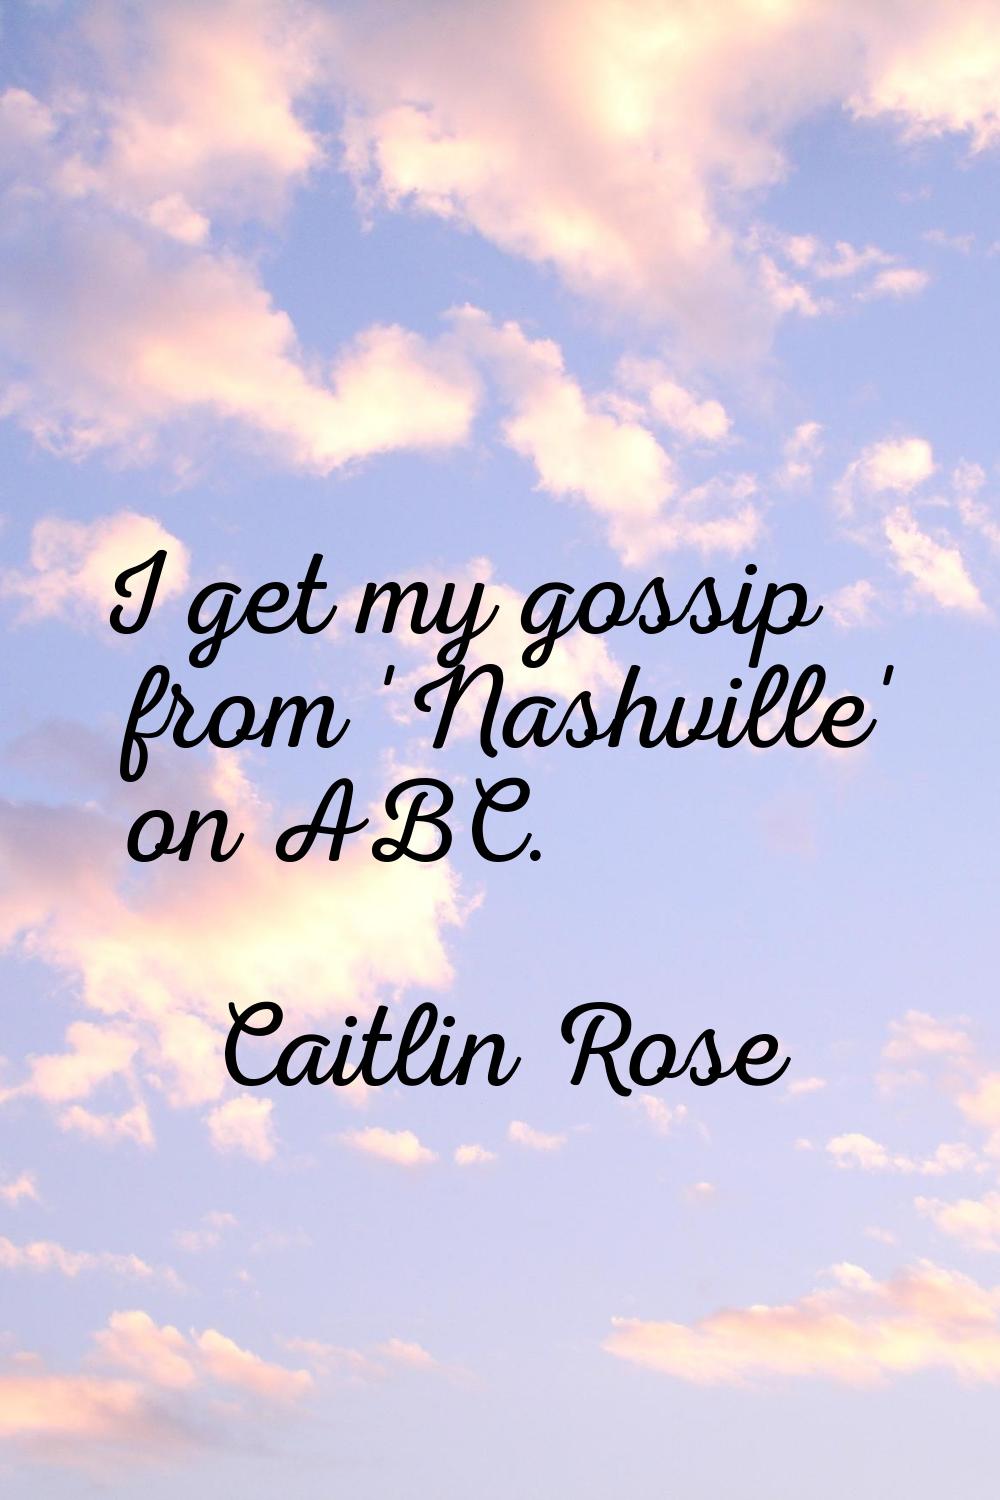 I get my gossip from 'Nashville' on ABC.